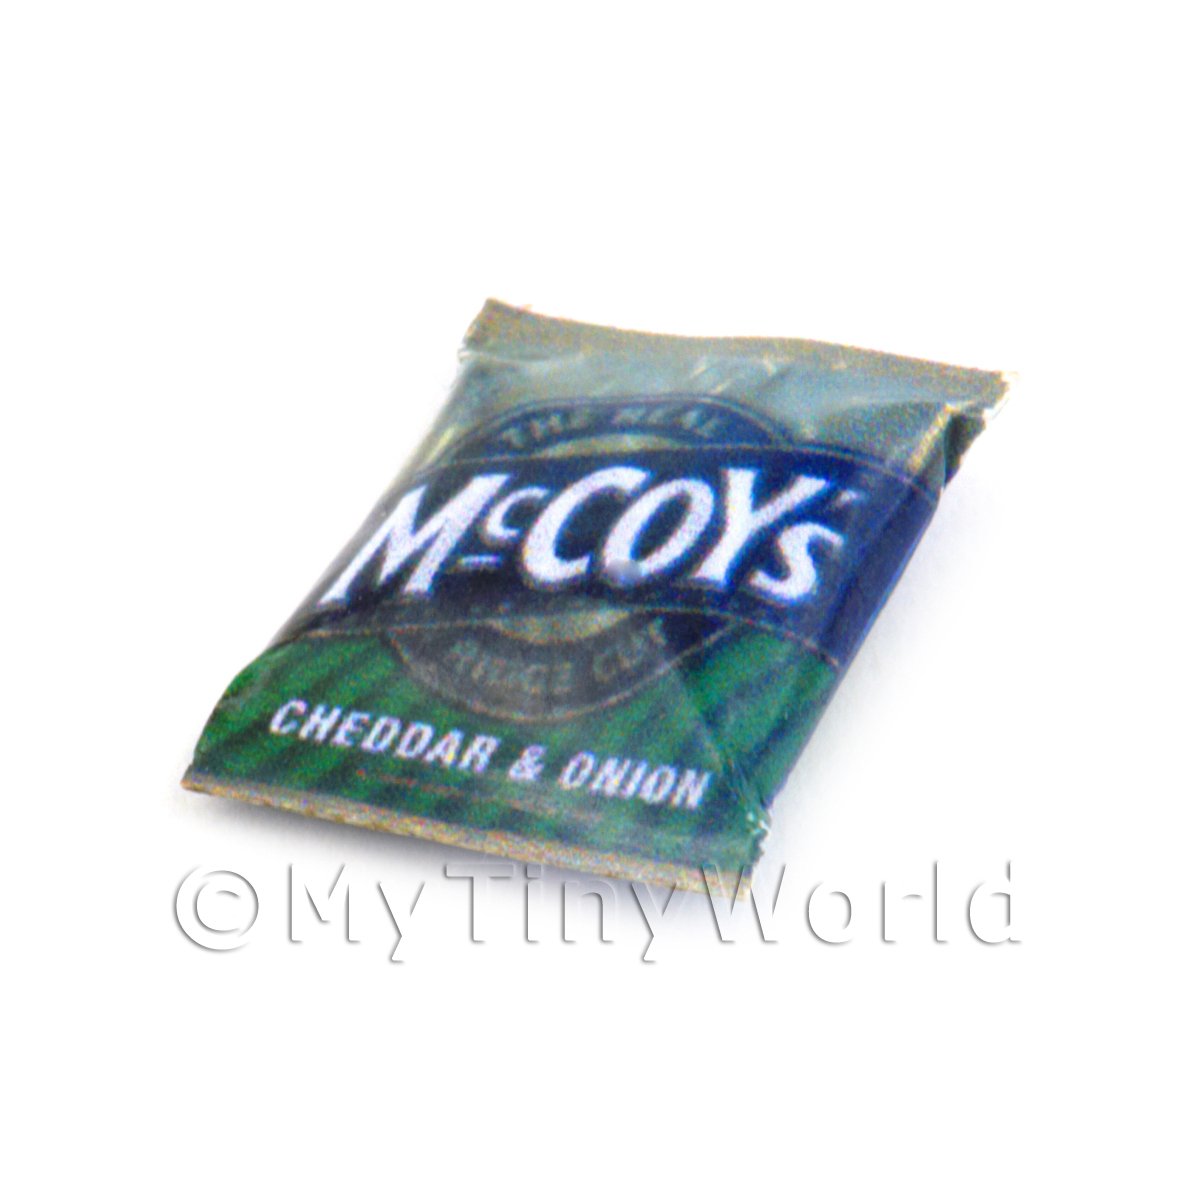 Dolls House Miniature Packaging Sheet of 8 McCoys Cheddar & Onion Crisps 